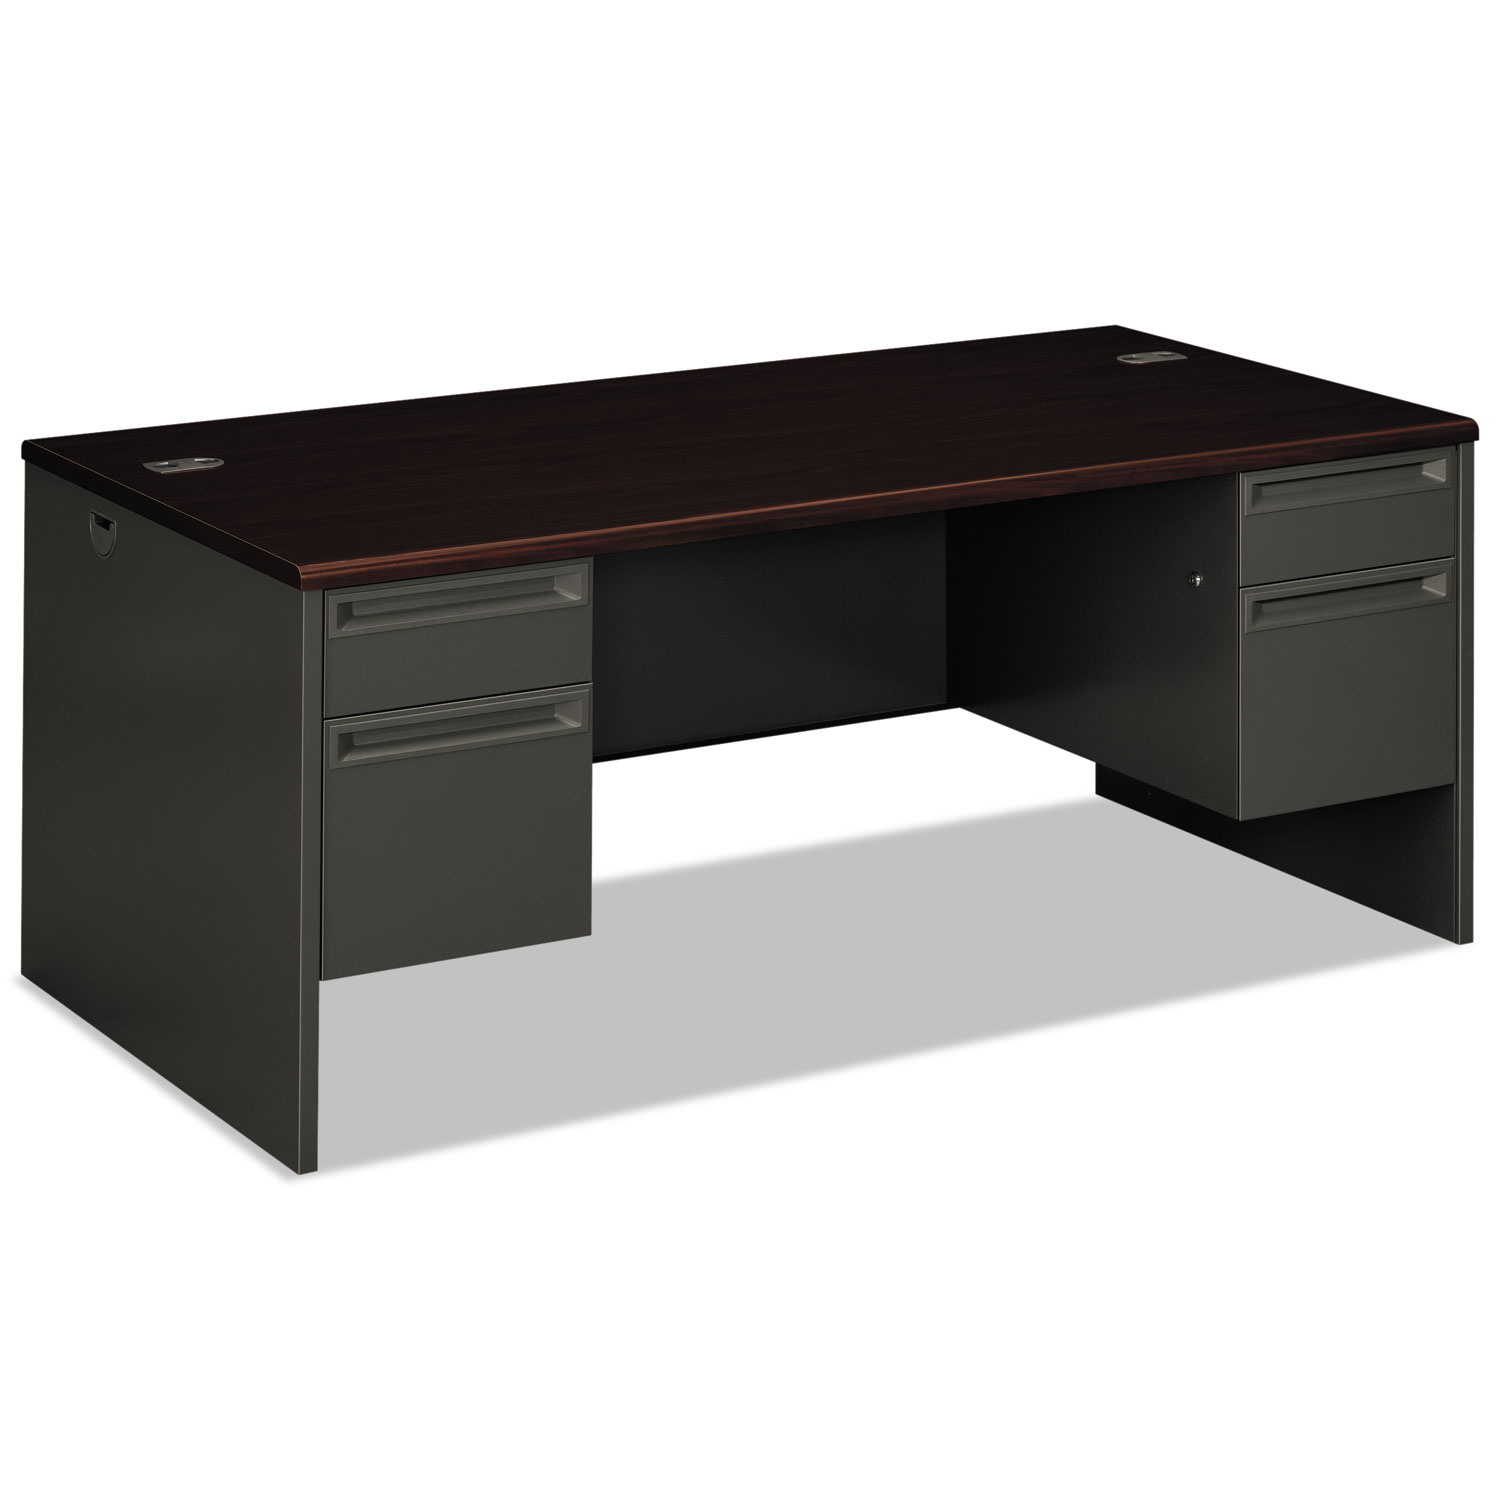  HON H38180.N.S 38000 Series Double Pedestal Desk, 72w x 36d x 29.5h, Mahogany/Charcoal (HON38180NS) 